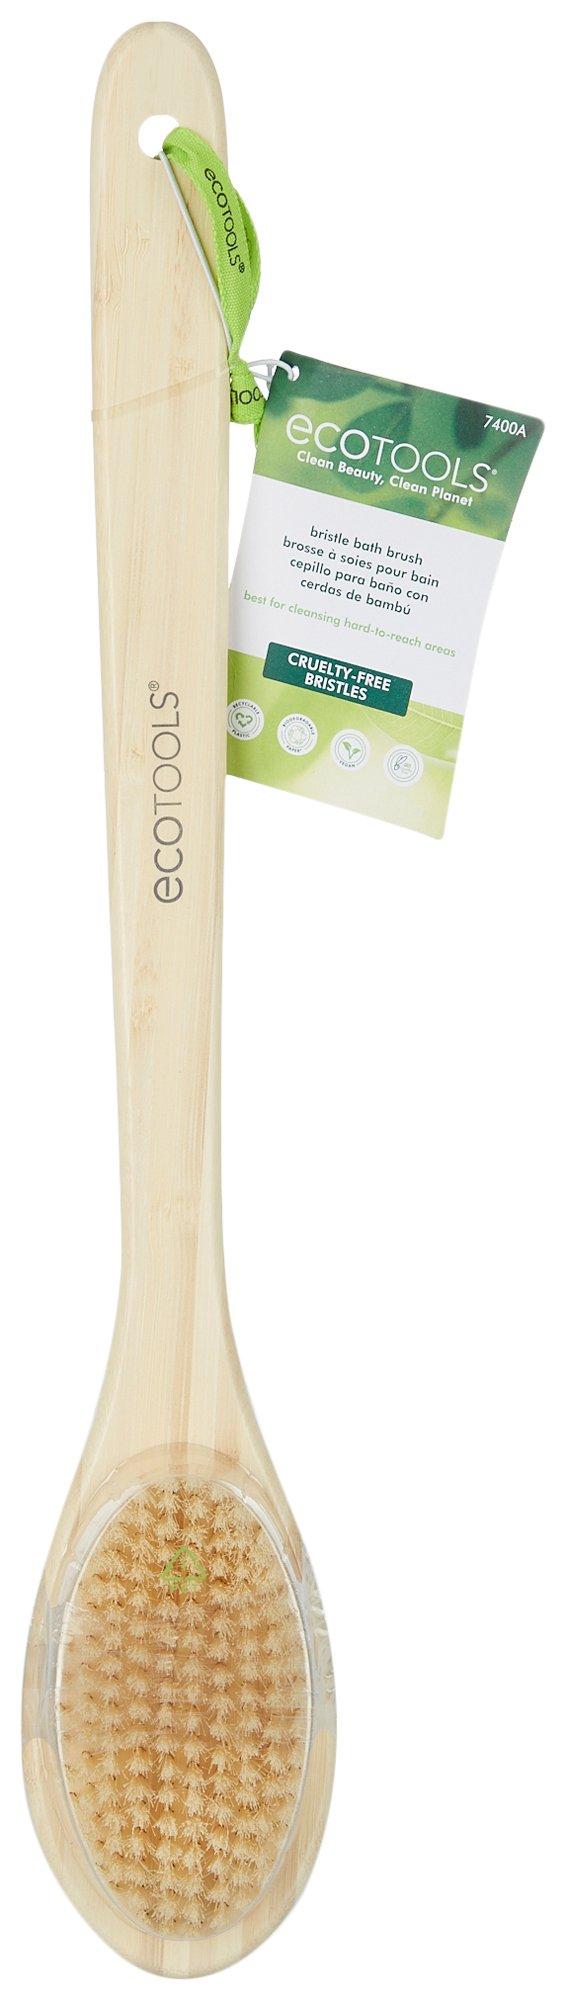 Ecotools Vegan Bristle Bath Brush With Wood Handle